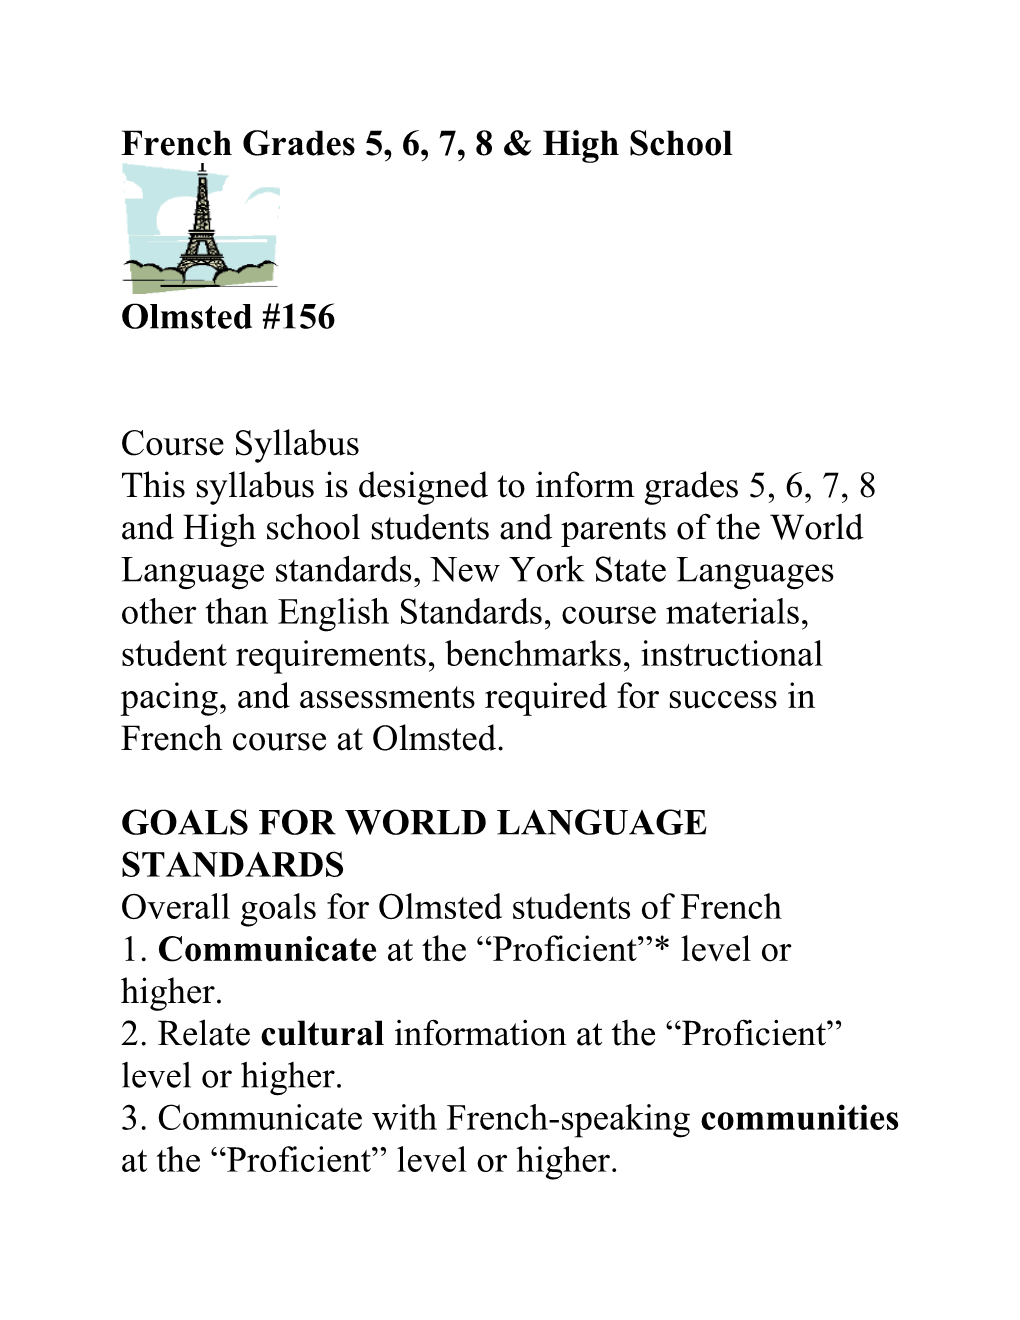 Goals for World Language Standards